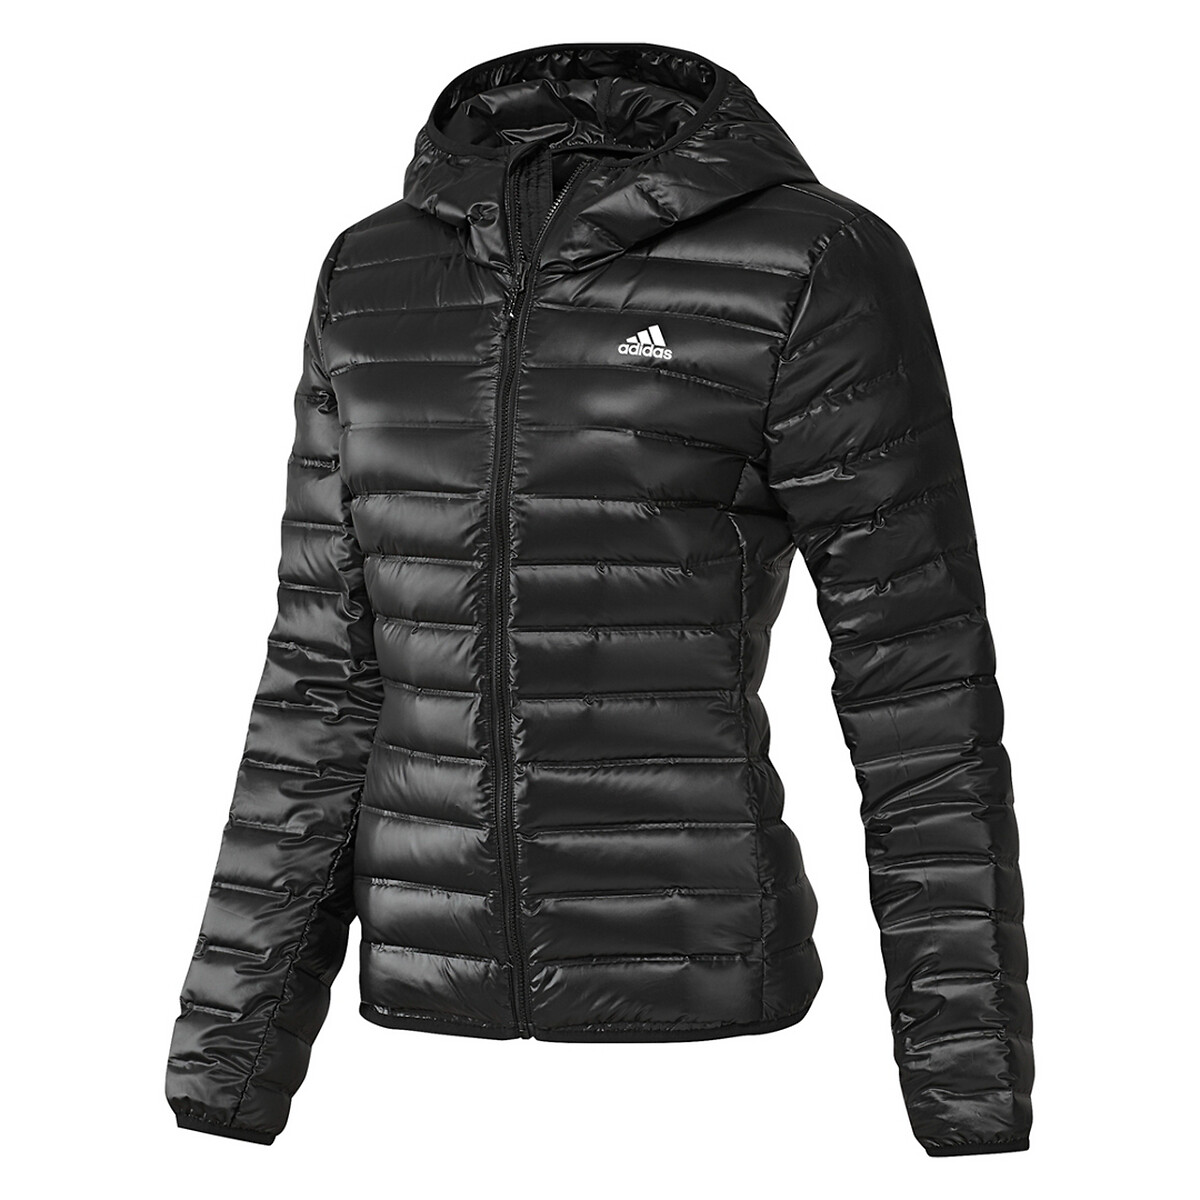 Varilite Windproof Padded Jacket, Showerproof and Lightweight